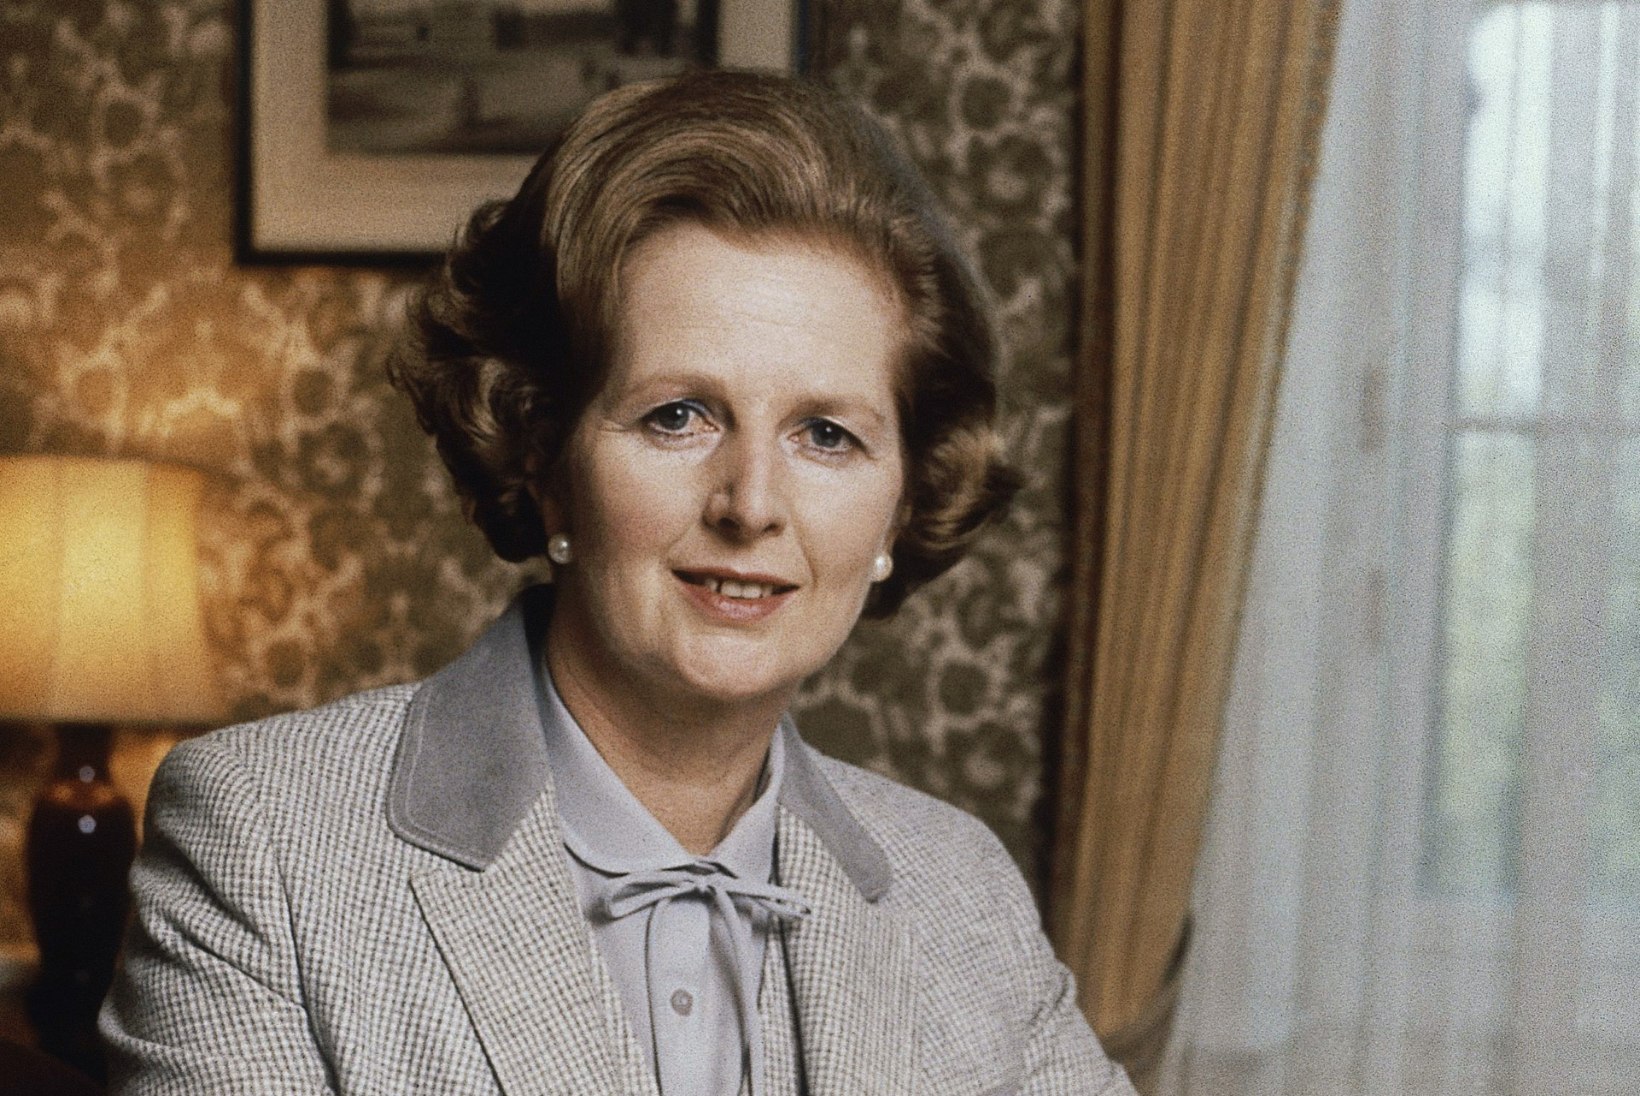 Ken Clark: Margaret Thatcher näitas dementsuse märke juba peaministri ametis olles